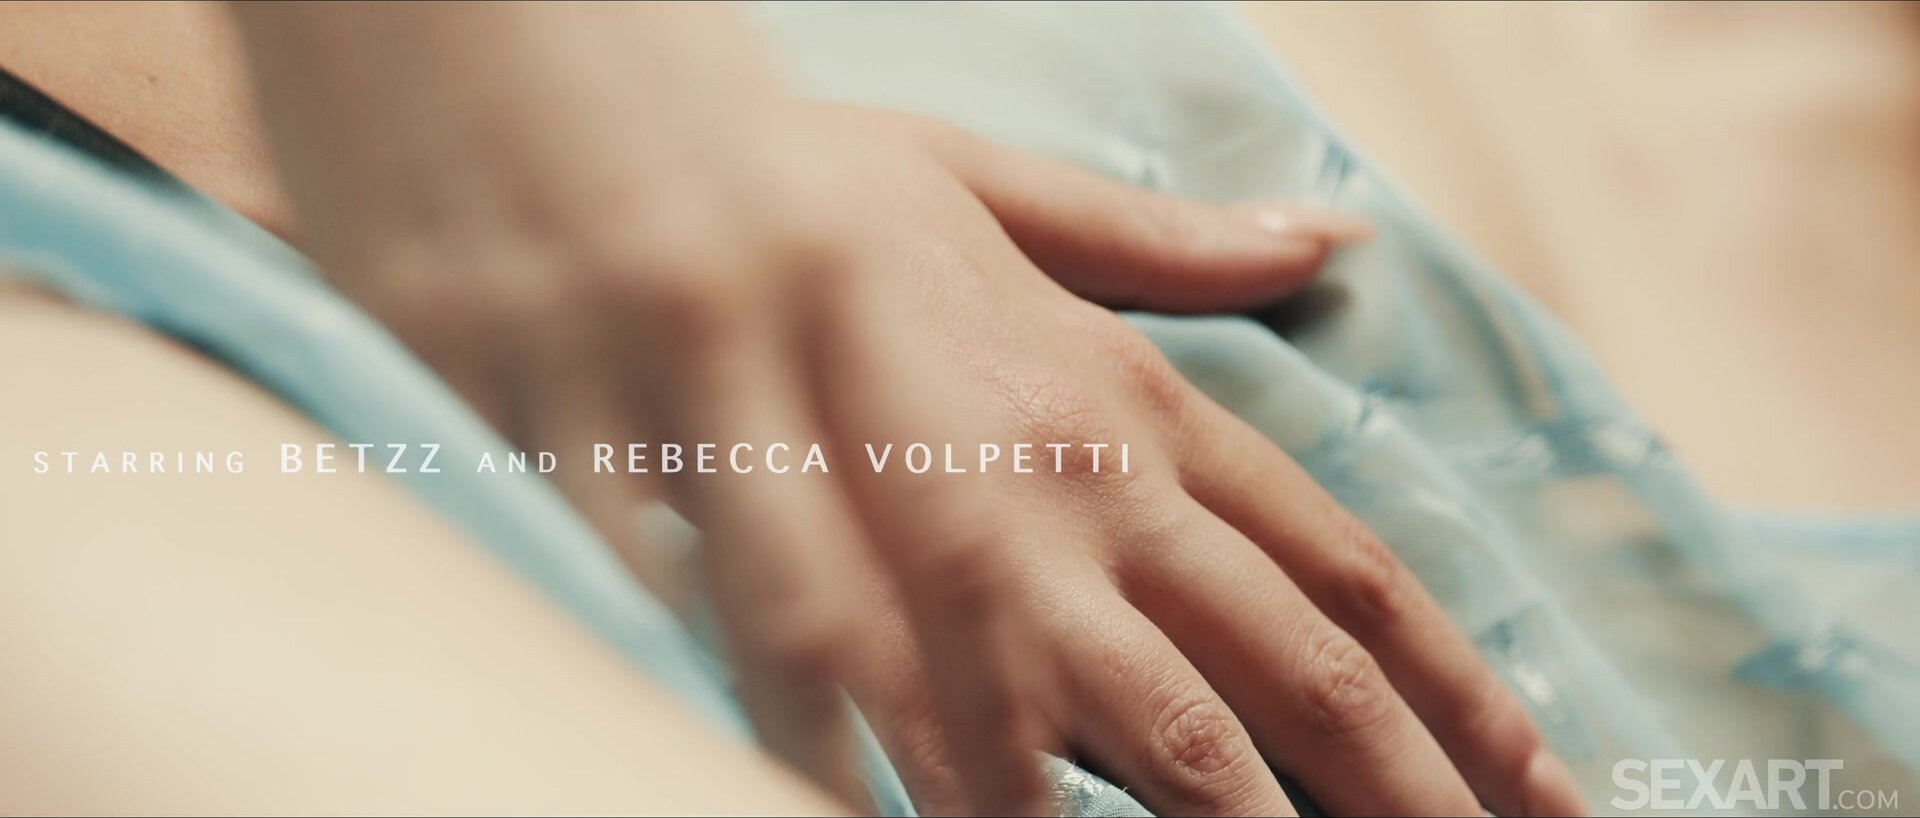 SexArt - Betzz And Rebecca Volpetti Intimate Reverie